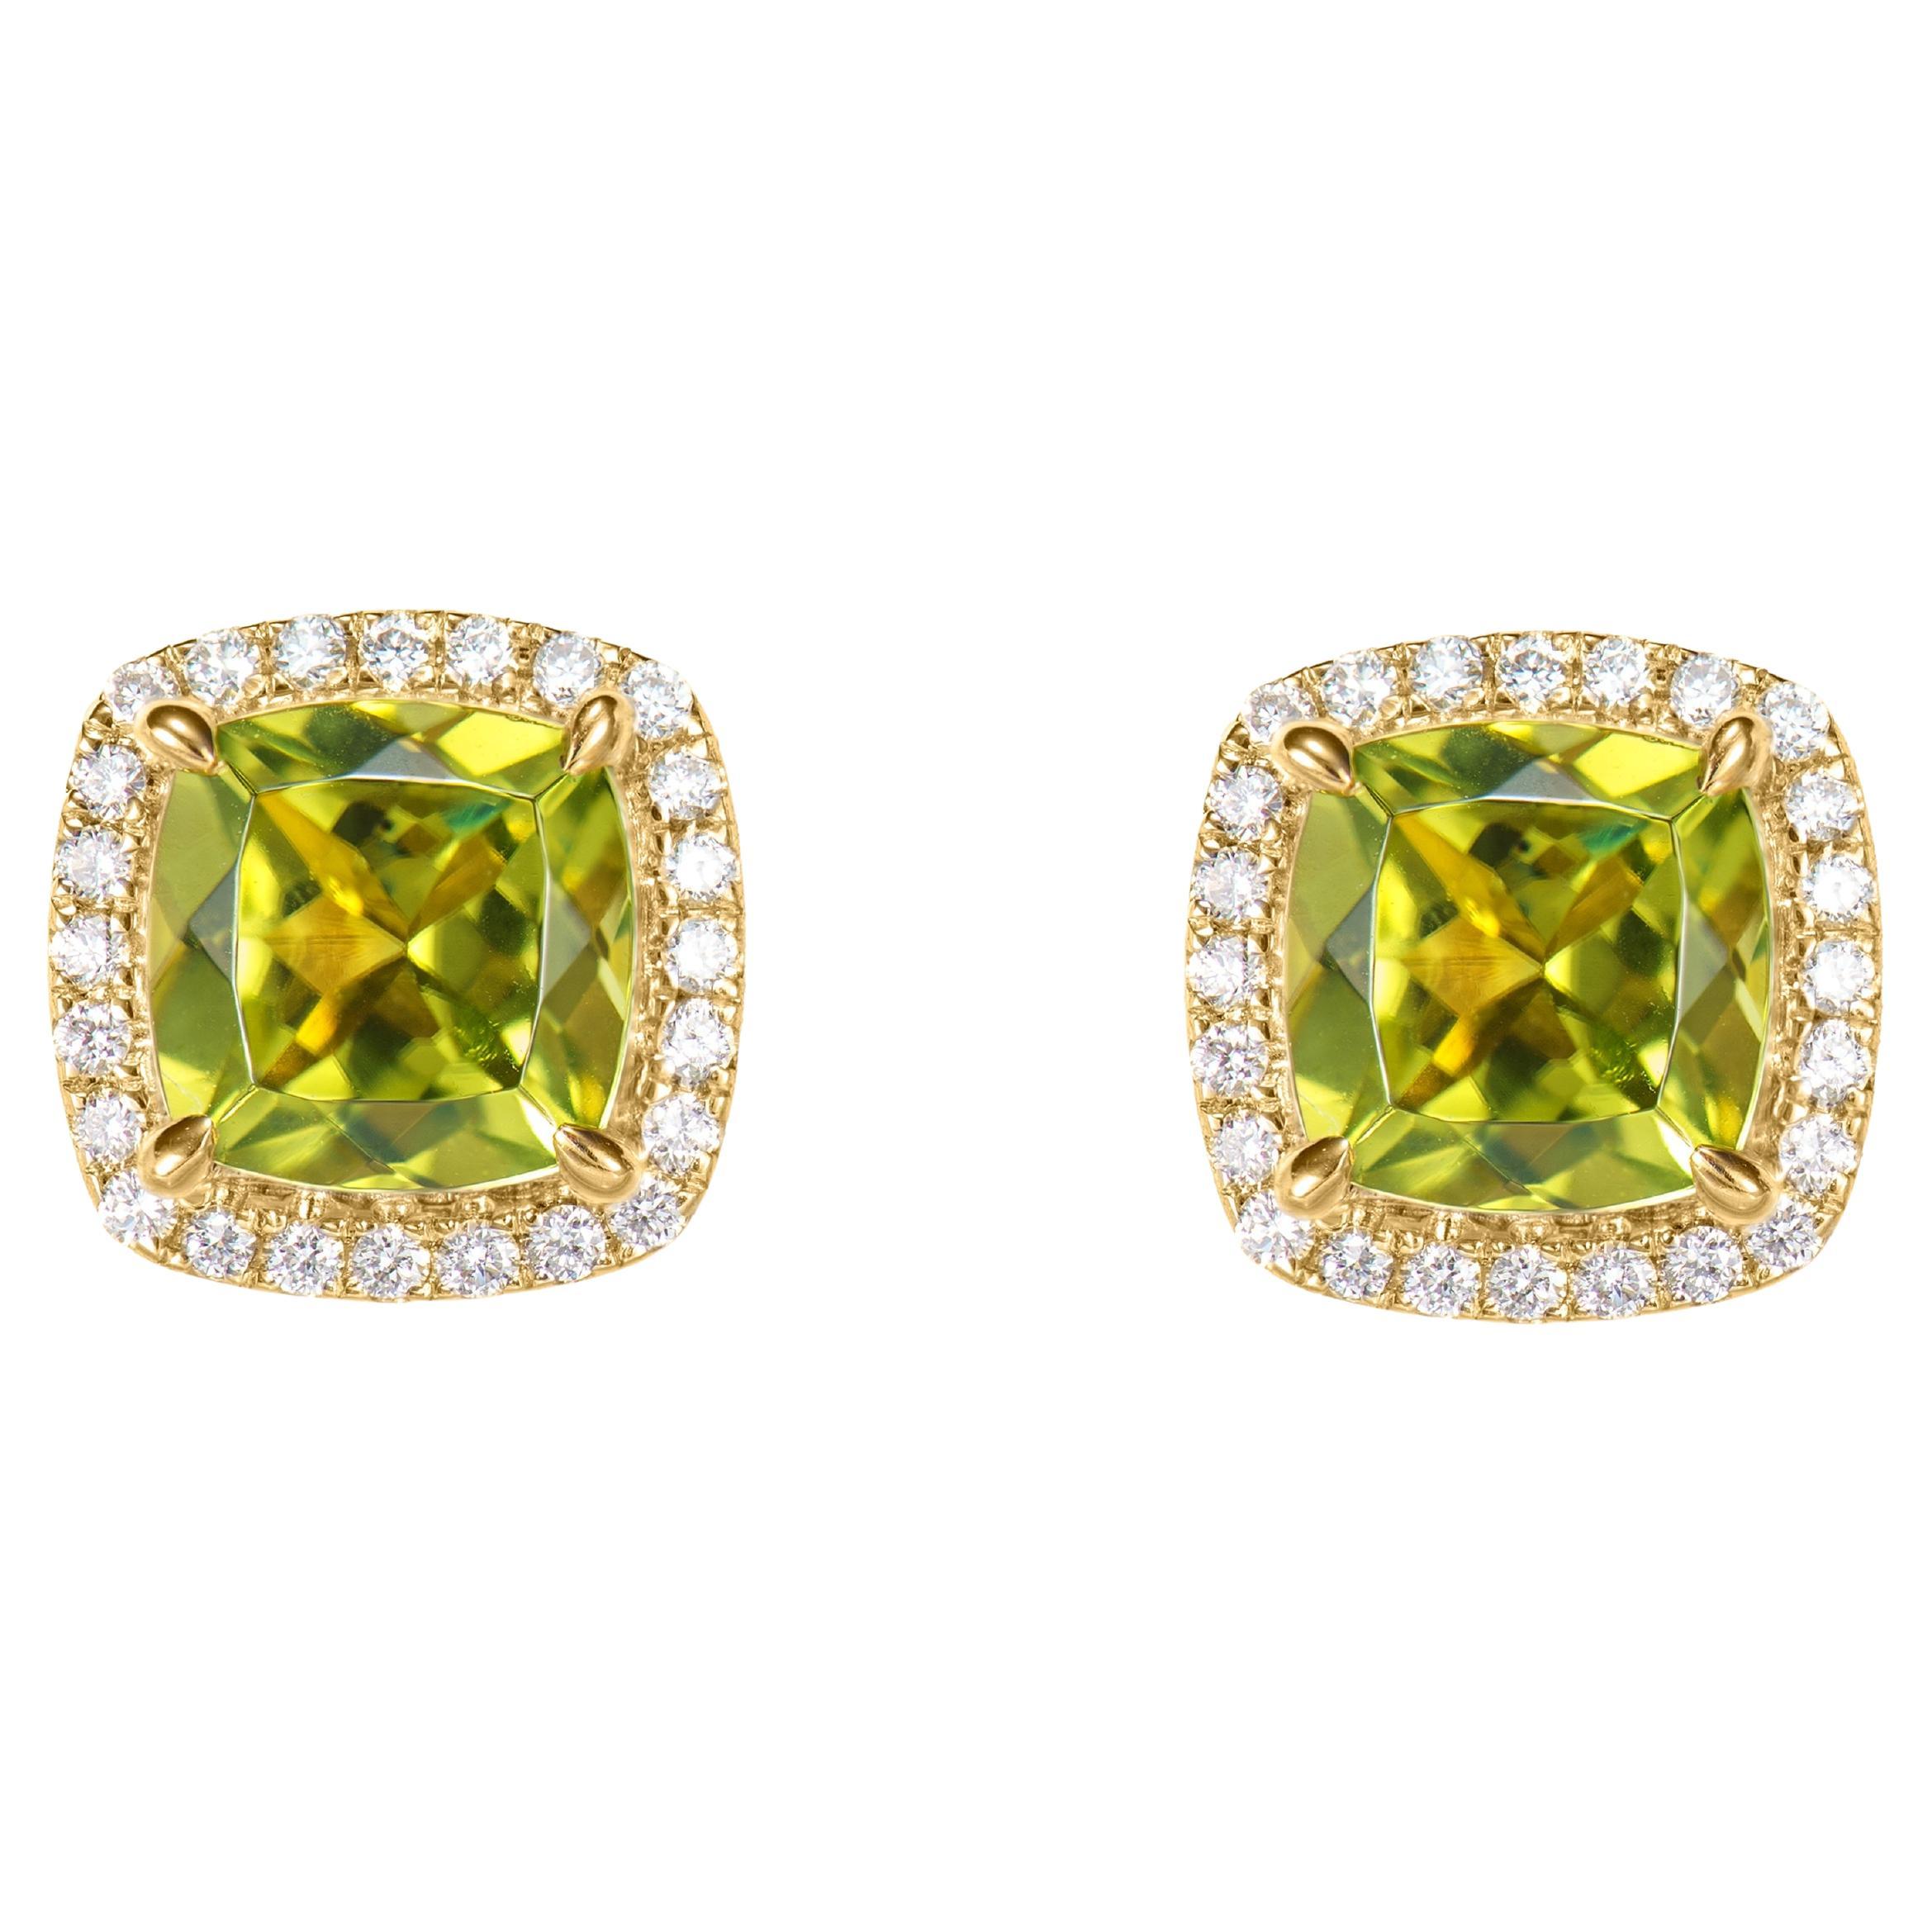 2.13 carat Peridot stud Earrings in 18Karat Yellow Gold with White Diamond.